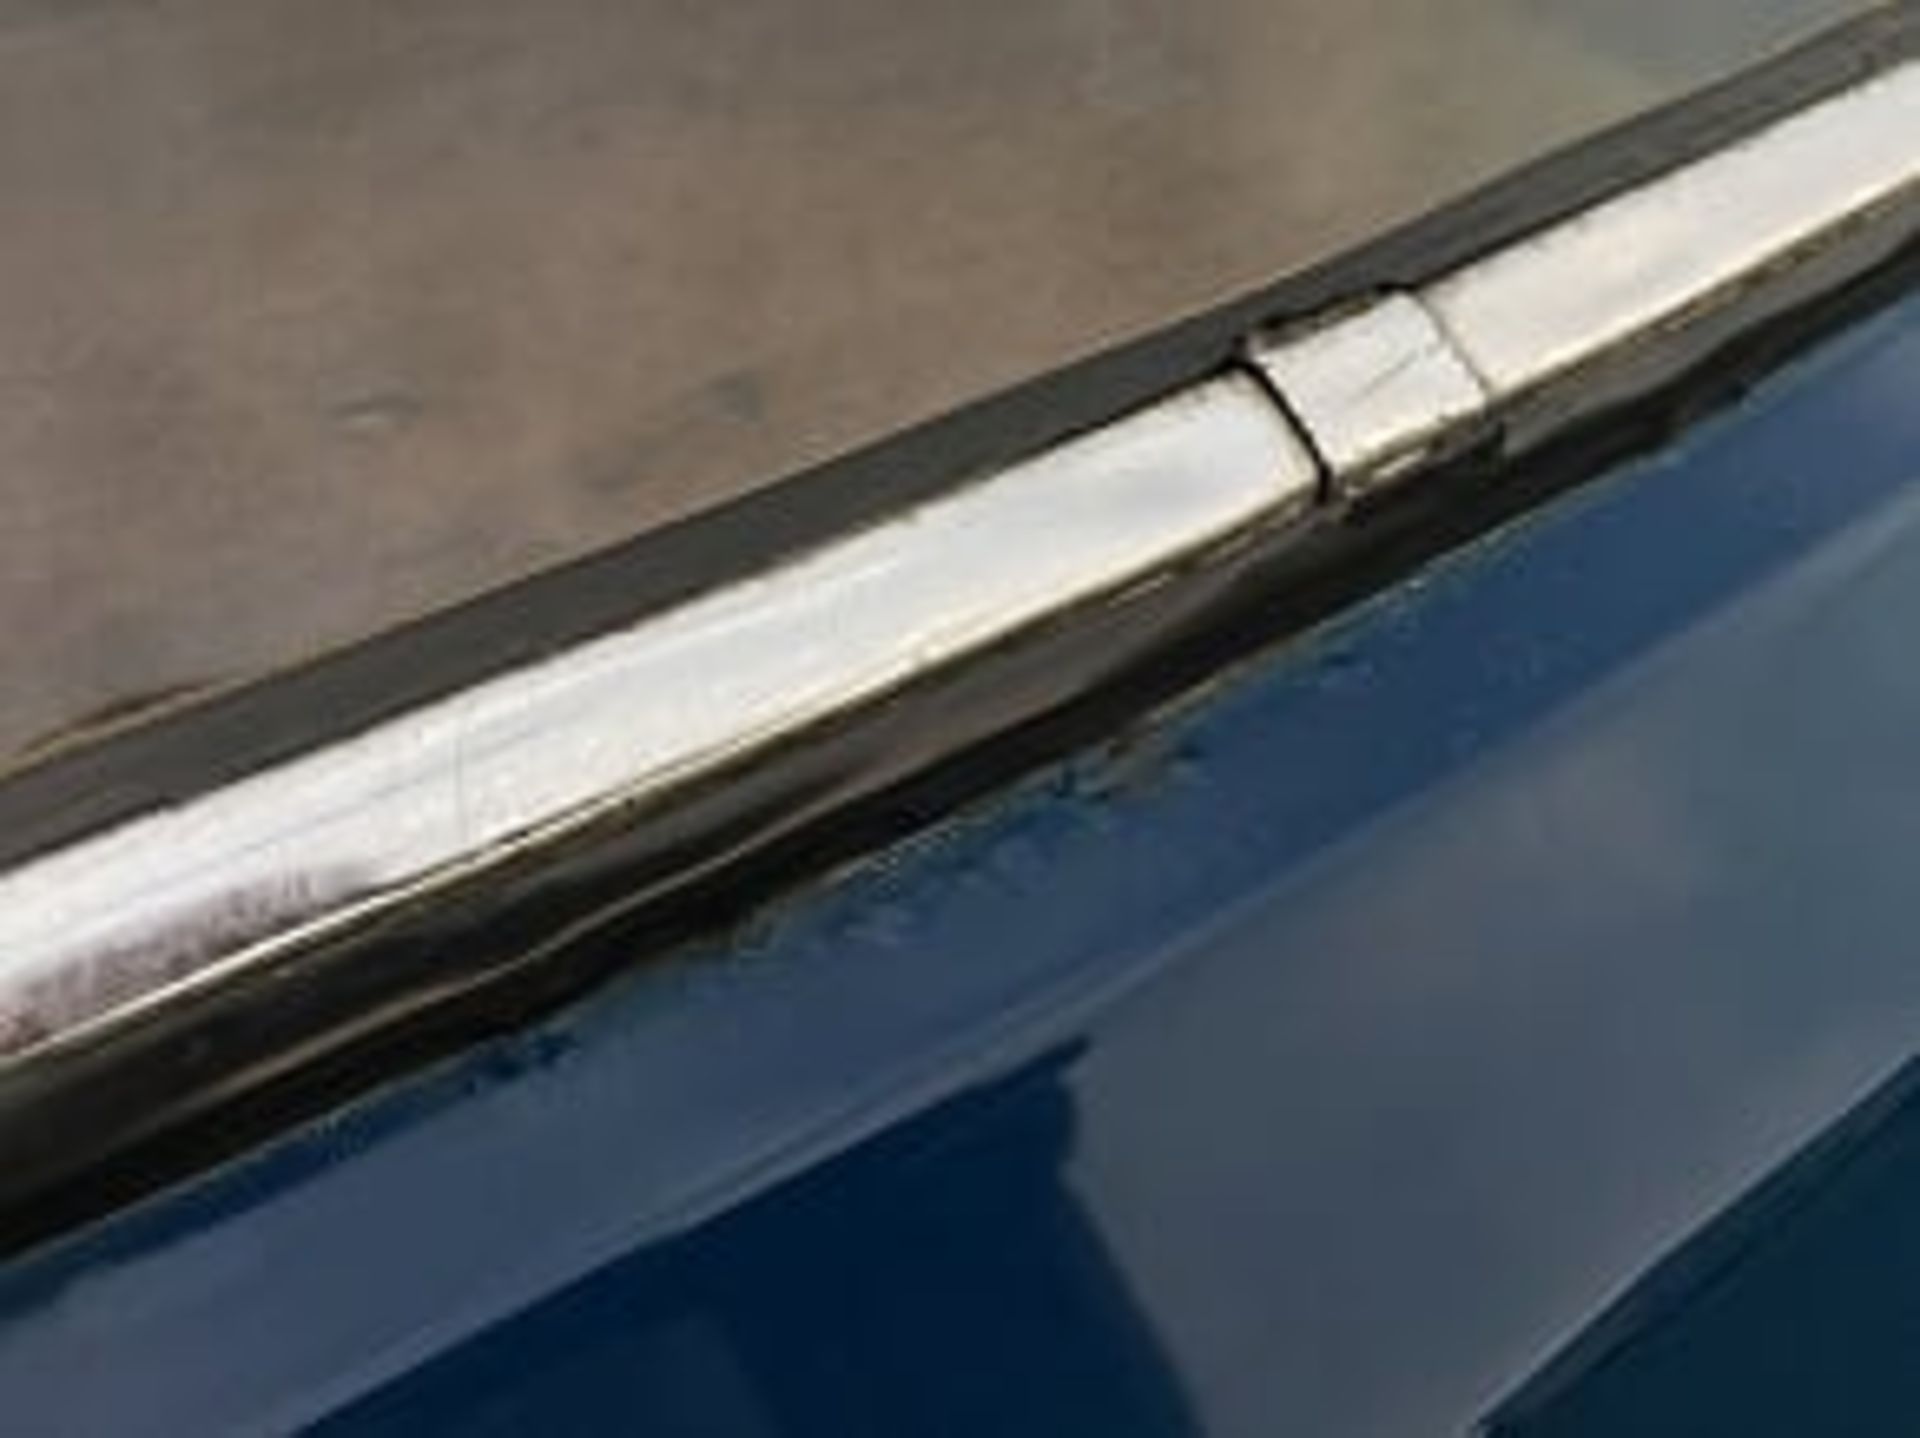 1971 MGB GT Chrome Bumper Teal Blue Overdrive - Image 26 of 30